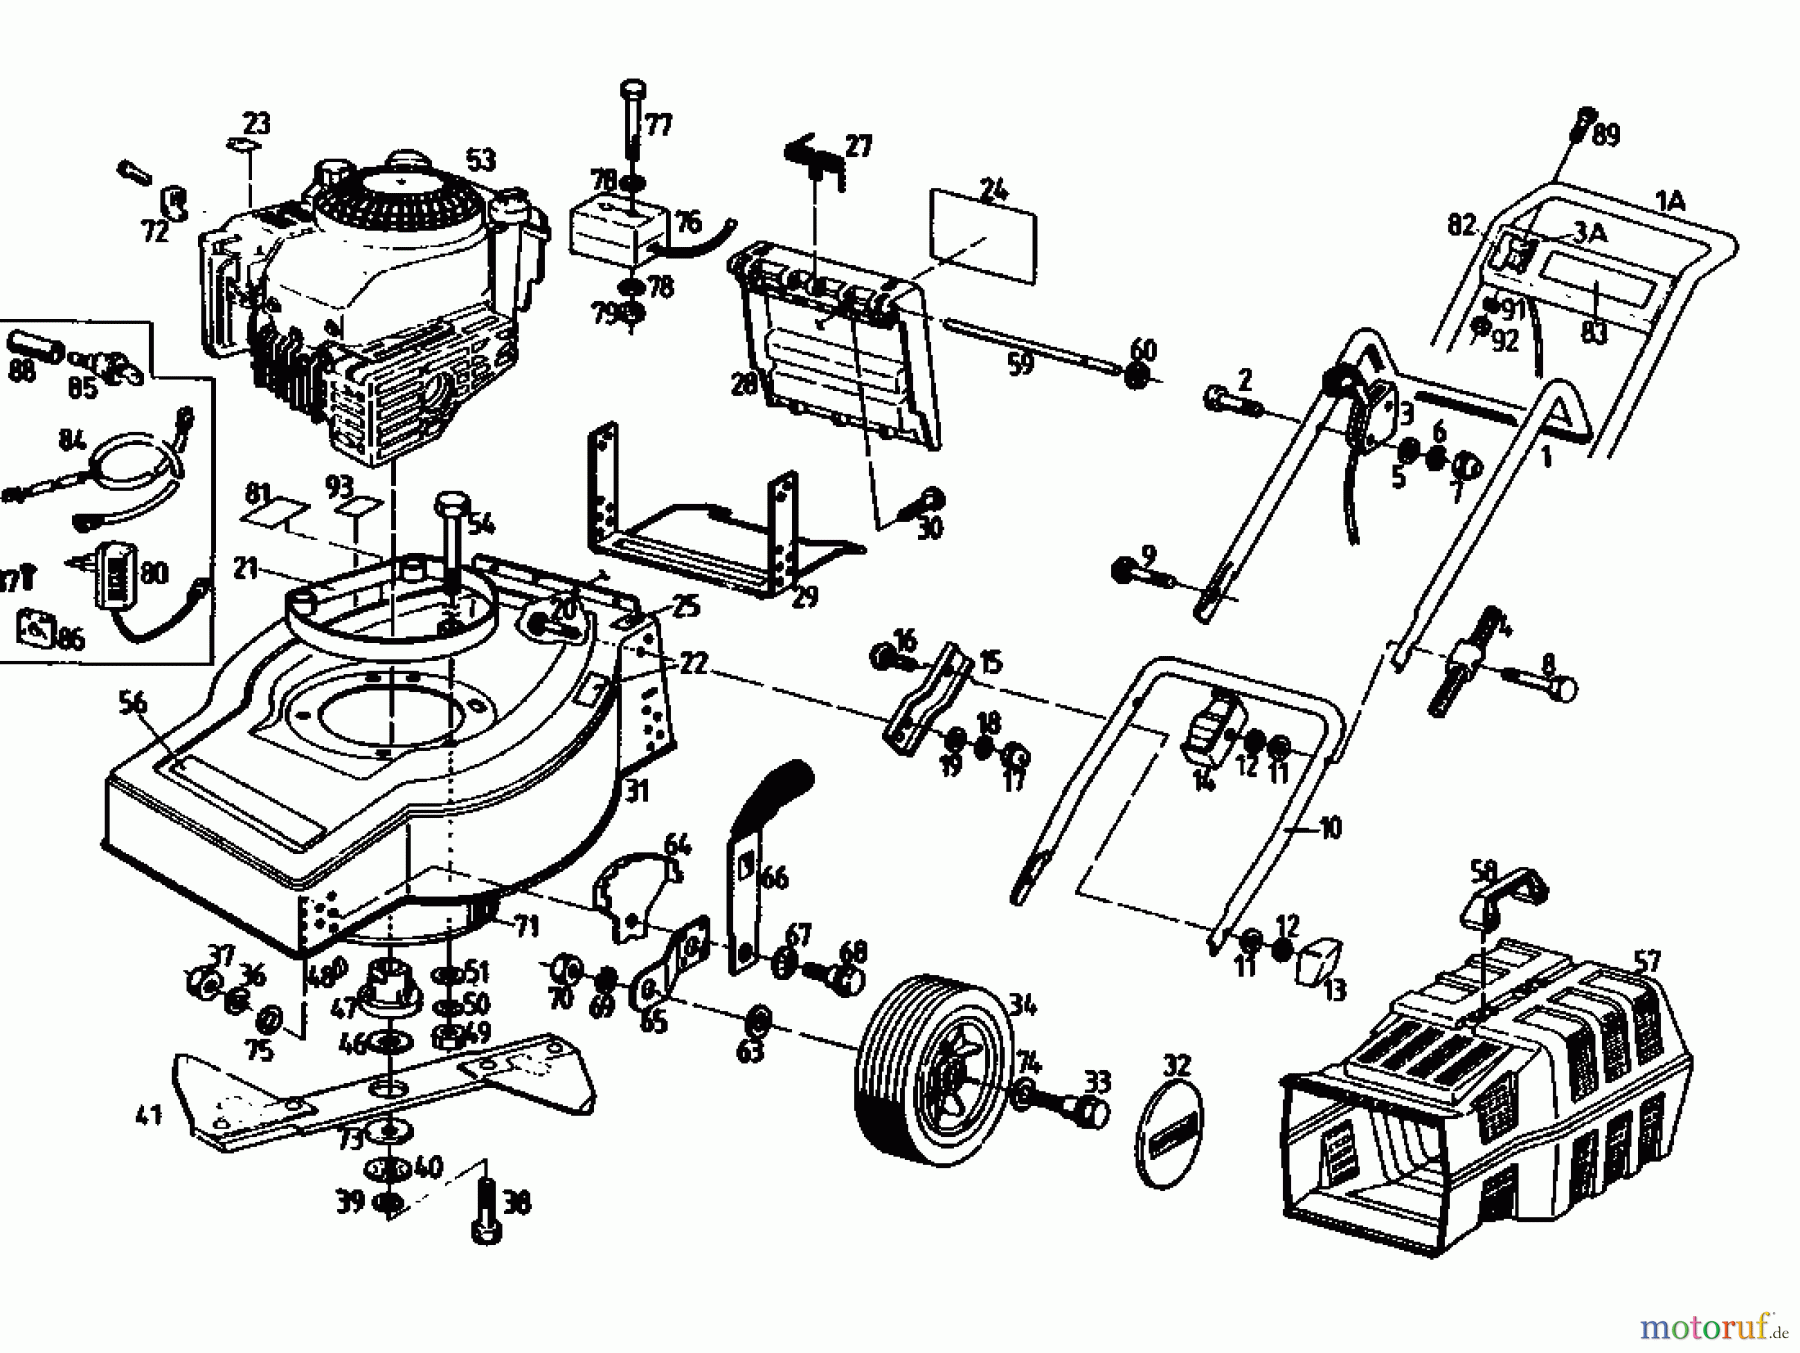  Gutbrod Tondeuse thermique TURBO HBS 02893.06  (1993) Machine de base